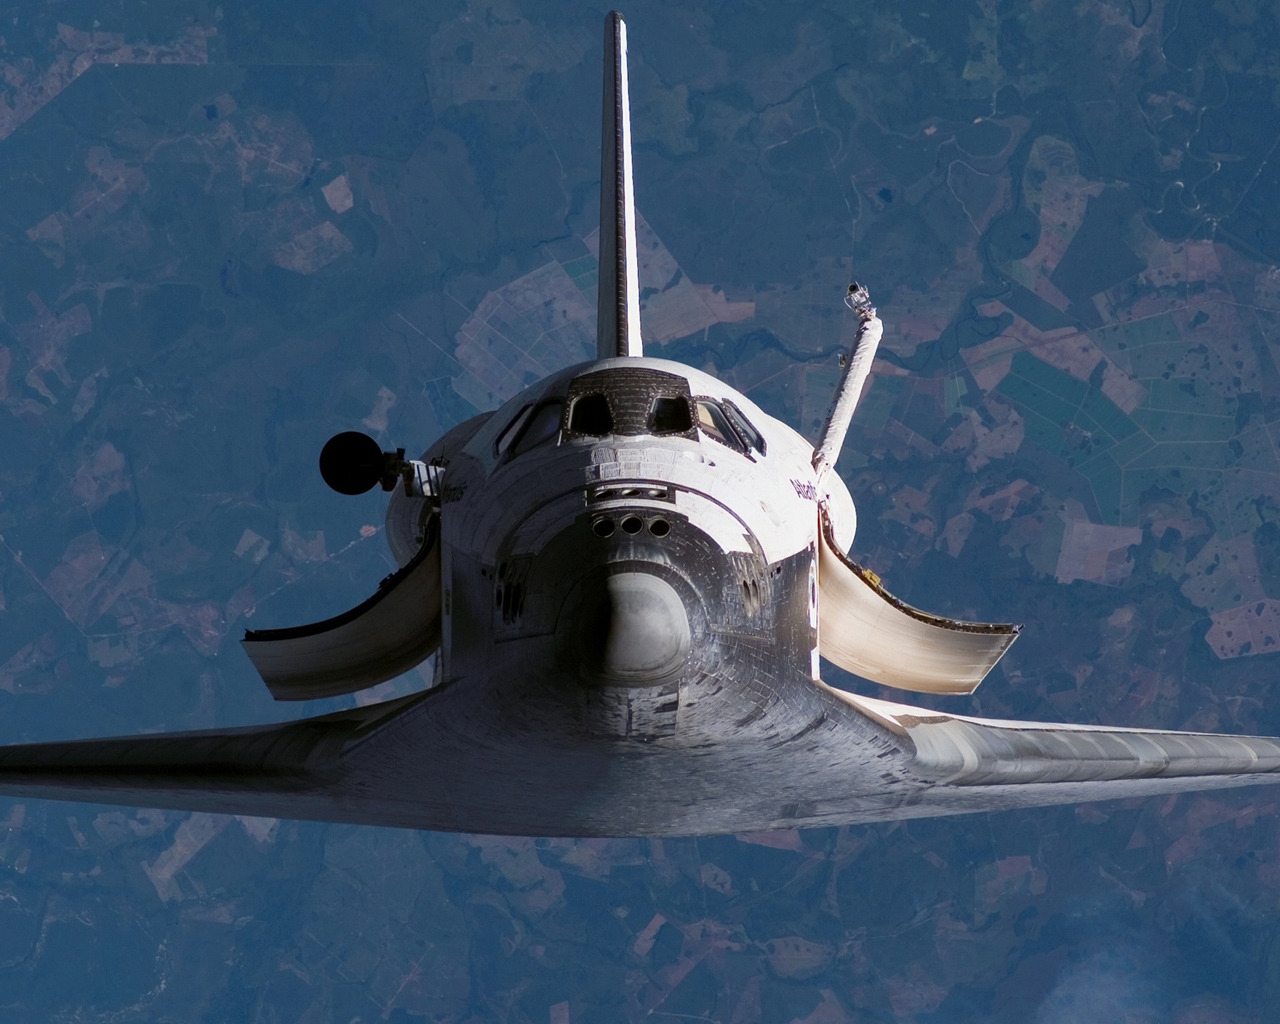 Space shuttle orbit for 1280 x 1024 resolution